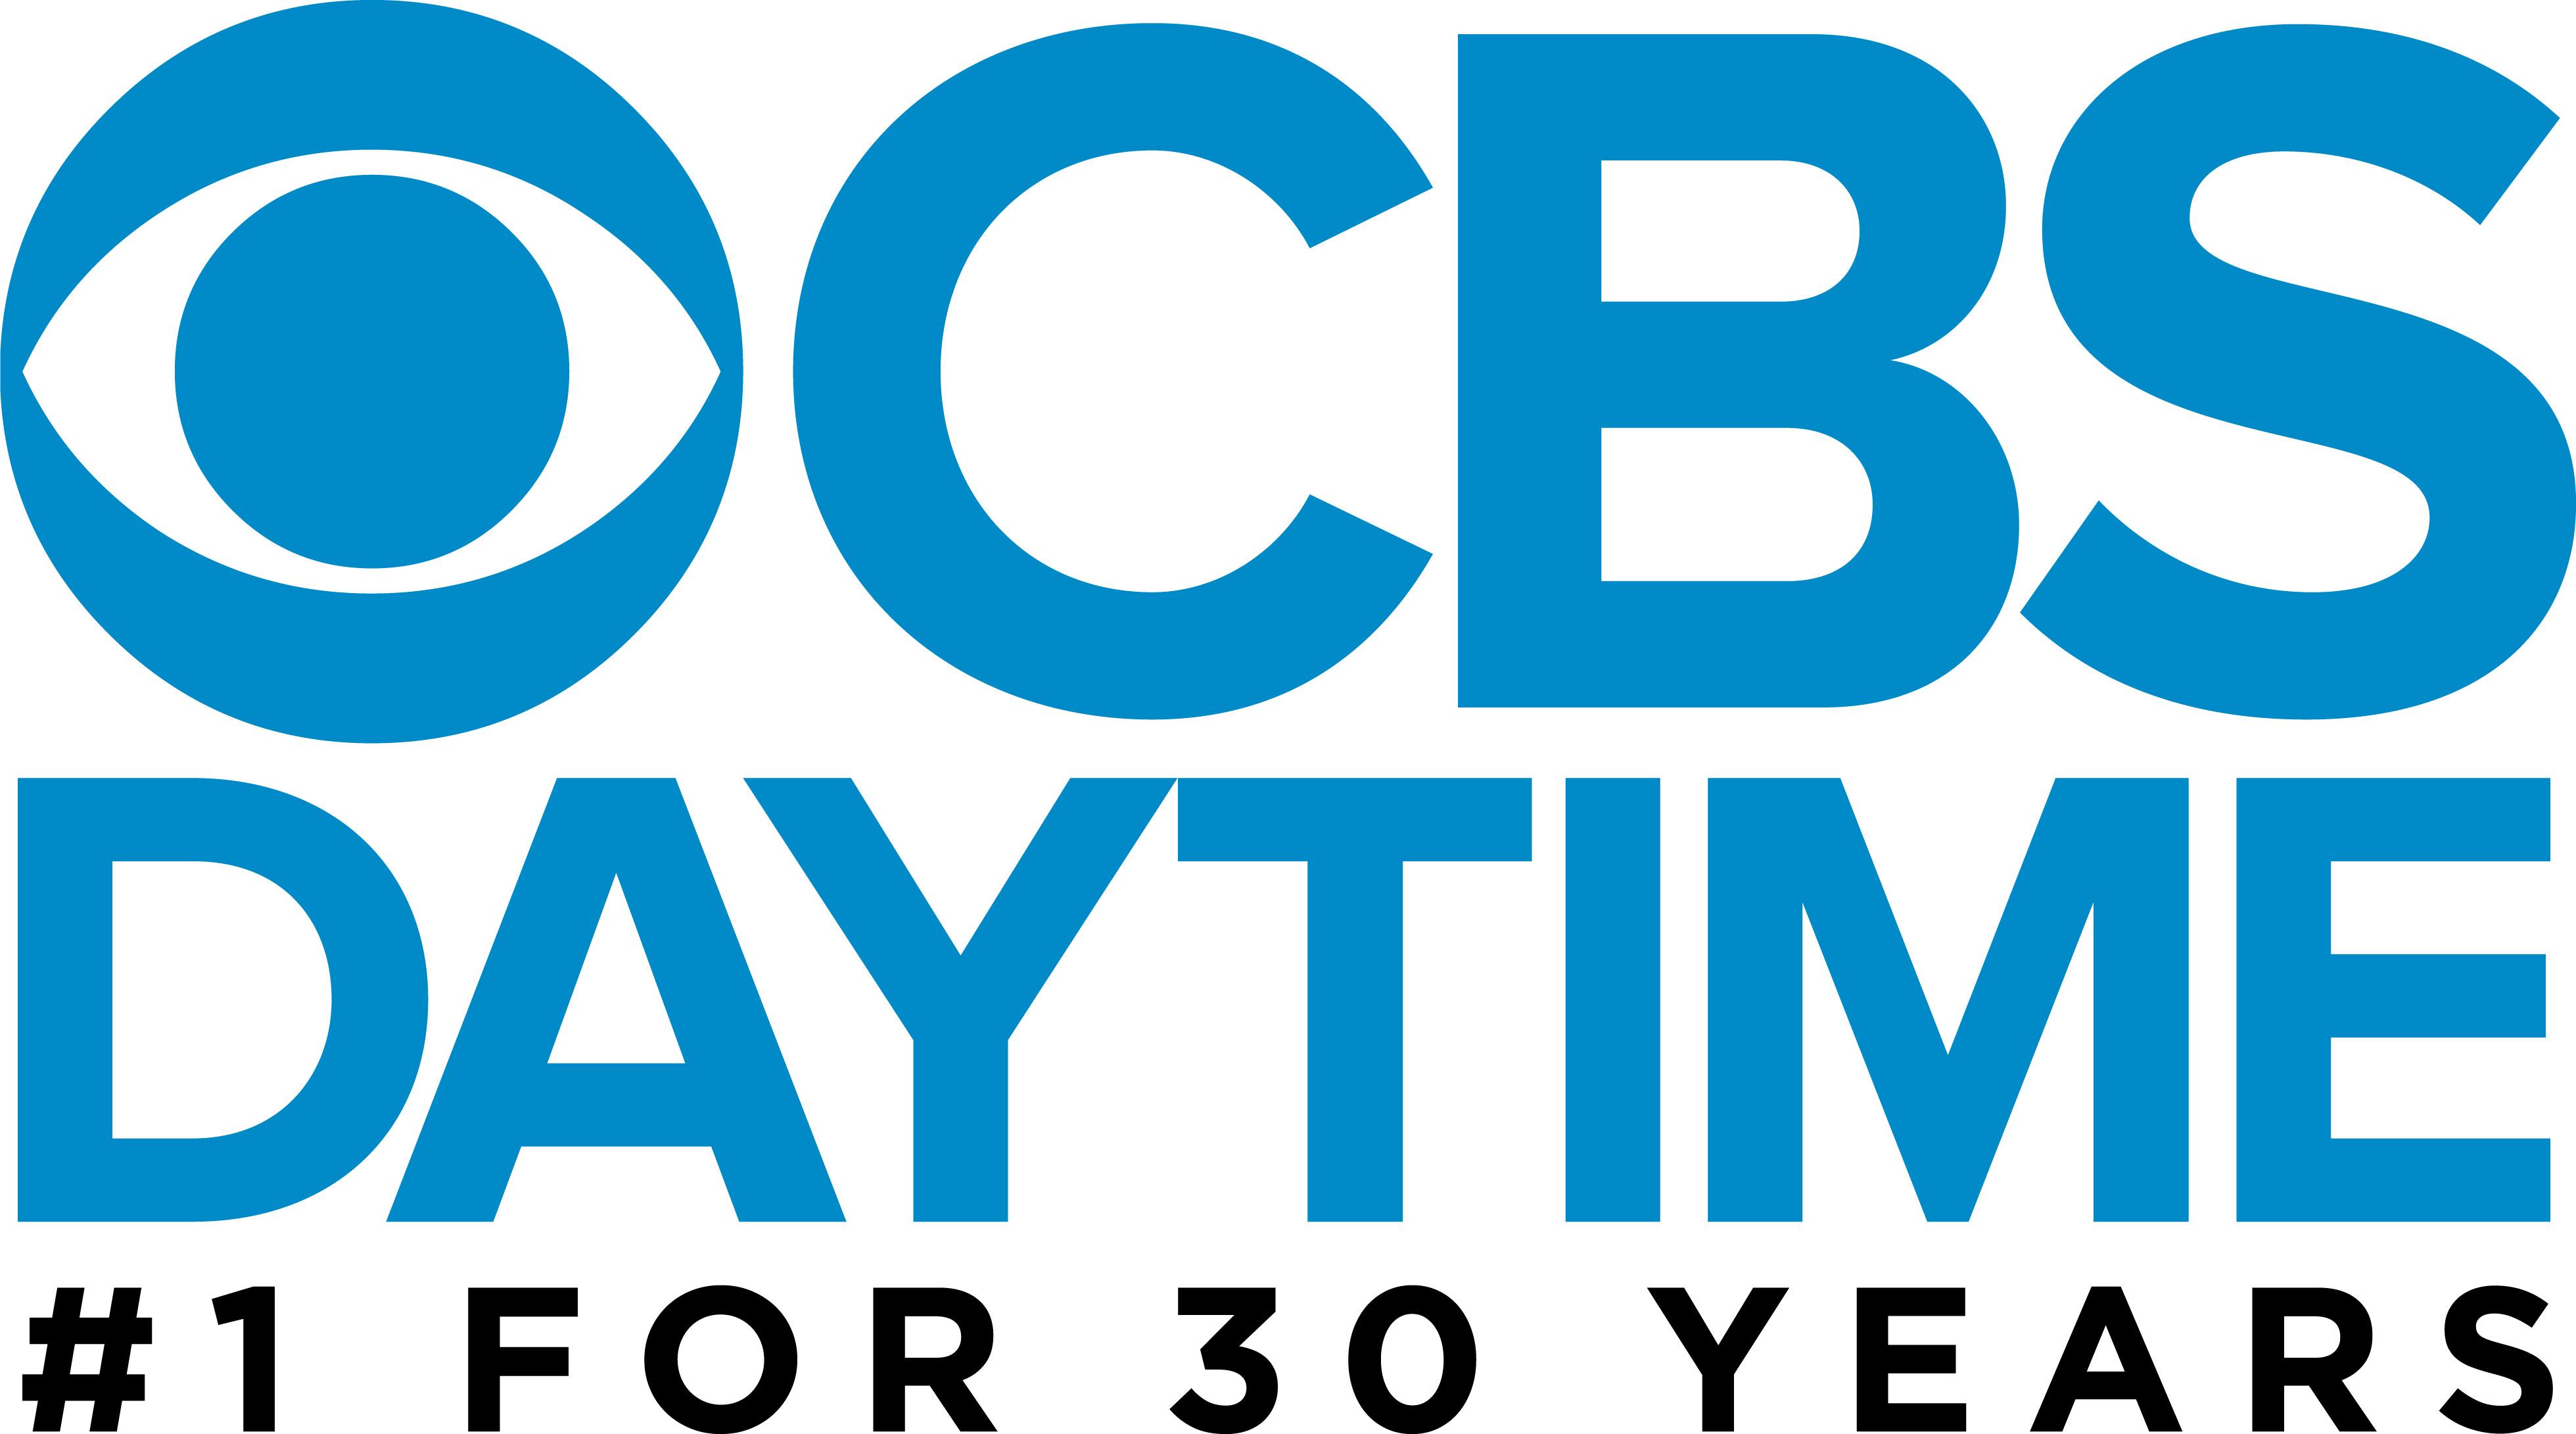 Paramount Press Express CBS DAYTIME CELEBRATES 30 YEARS AT 1